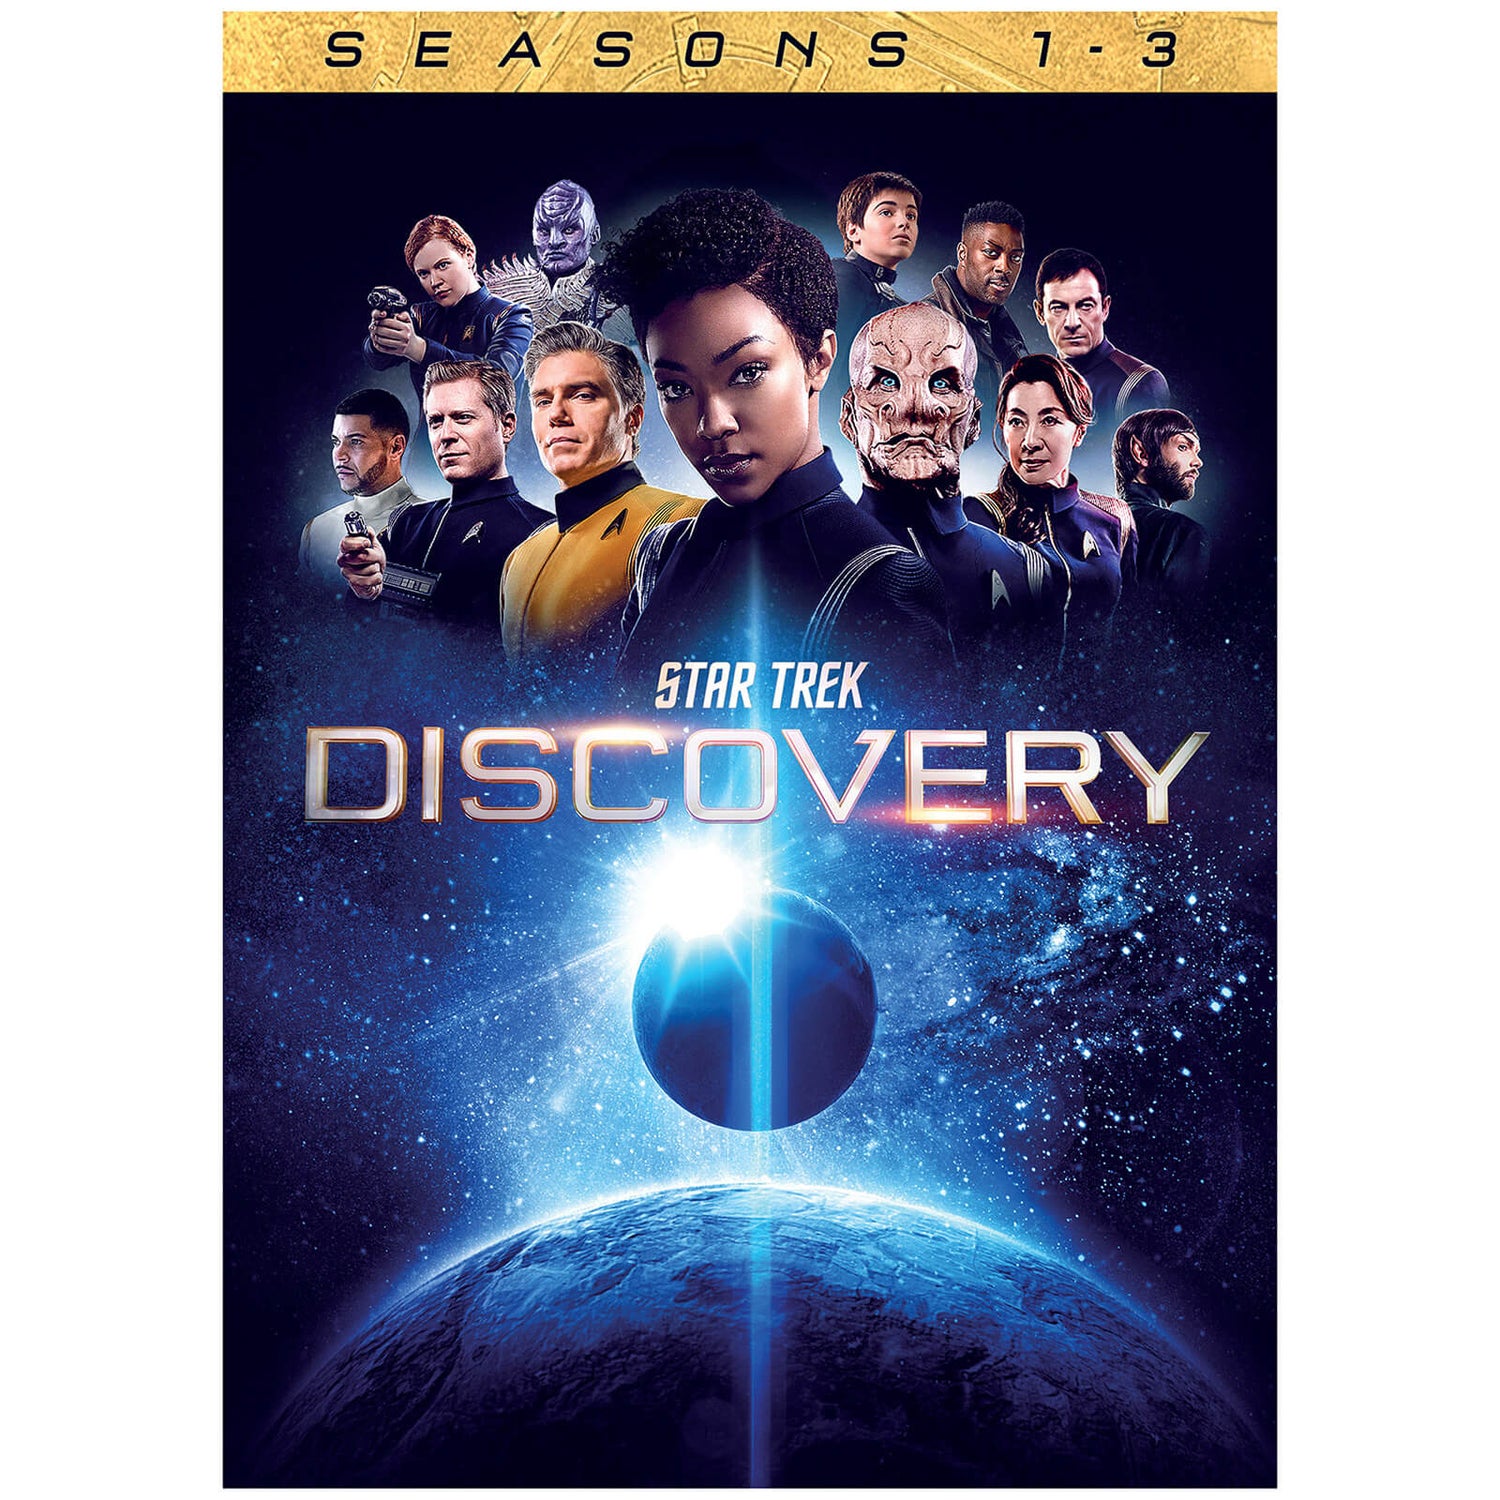 Star Trek: Discovery - Season 1-3